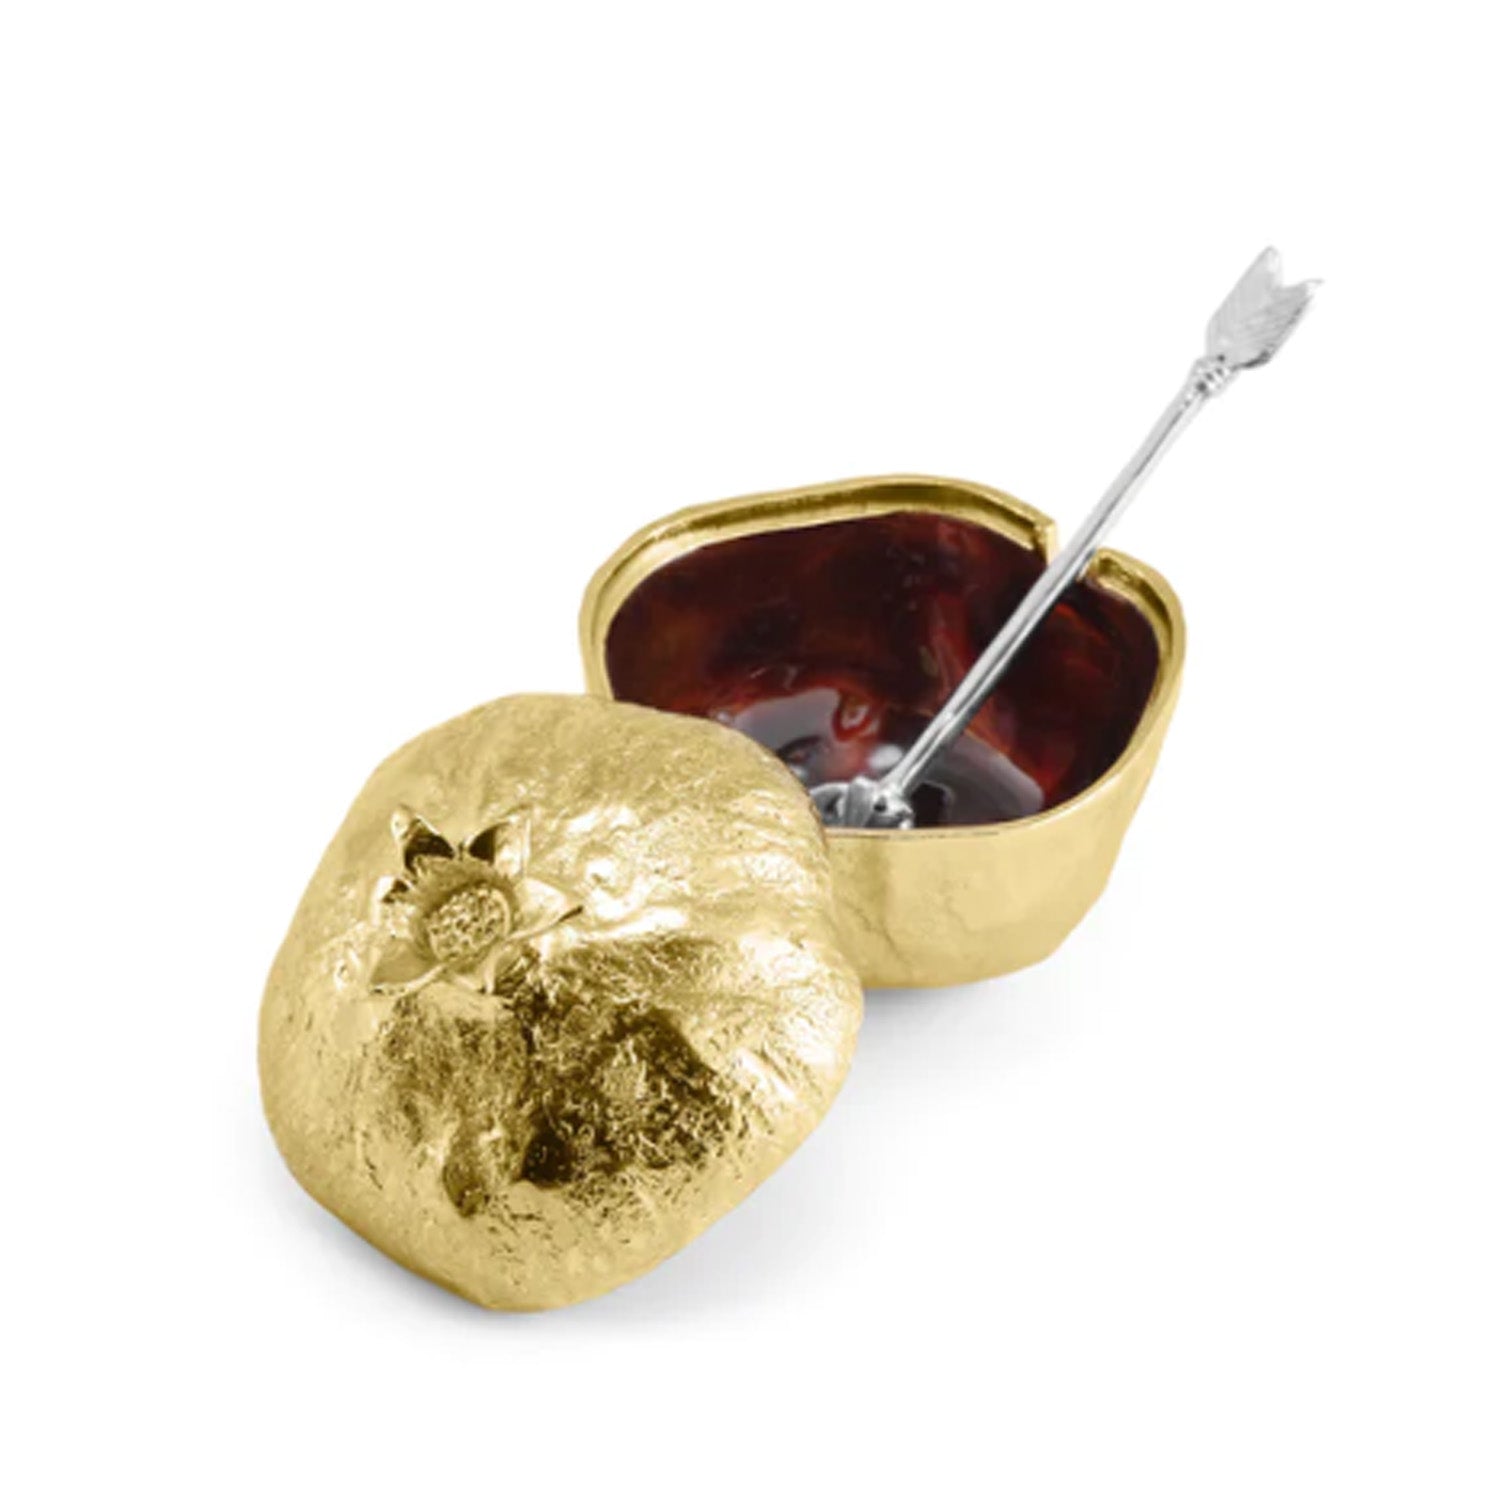 Michael Aram - Pomegranate Pot with spoon